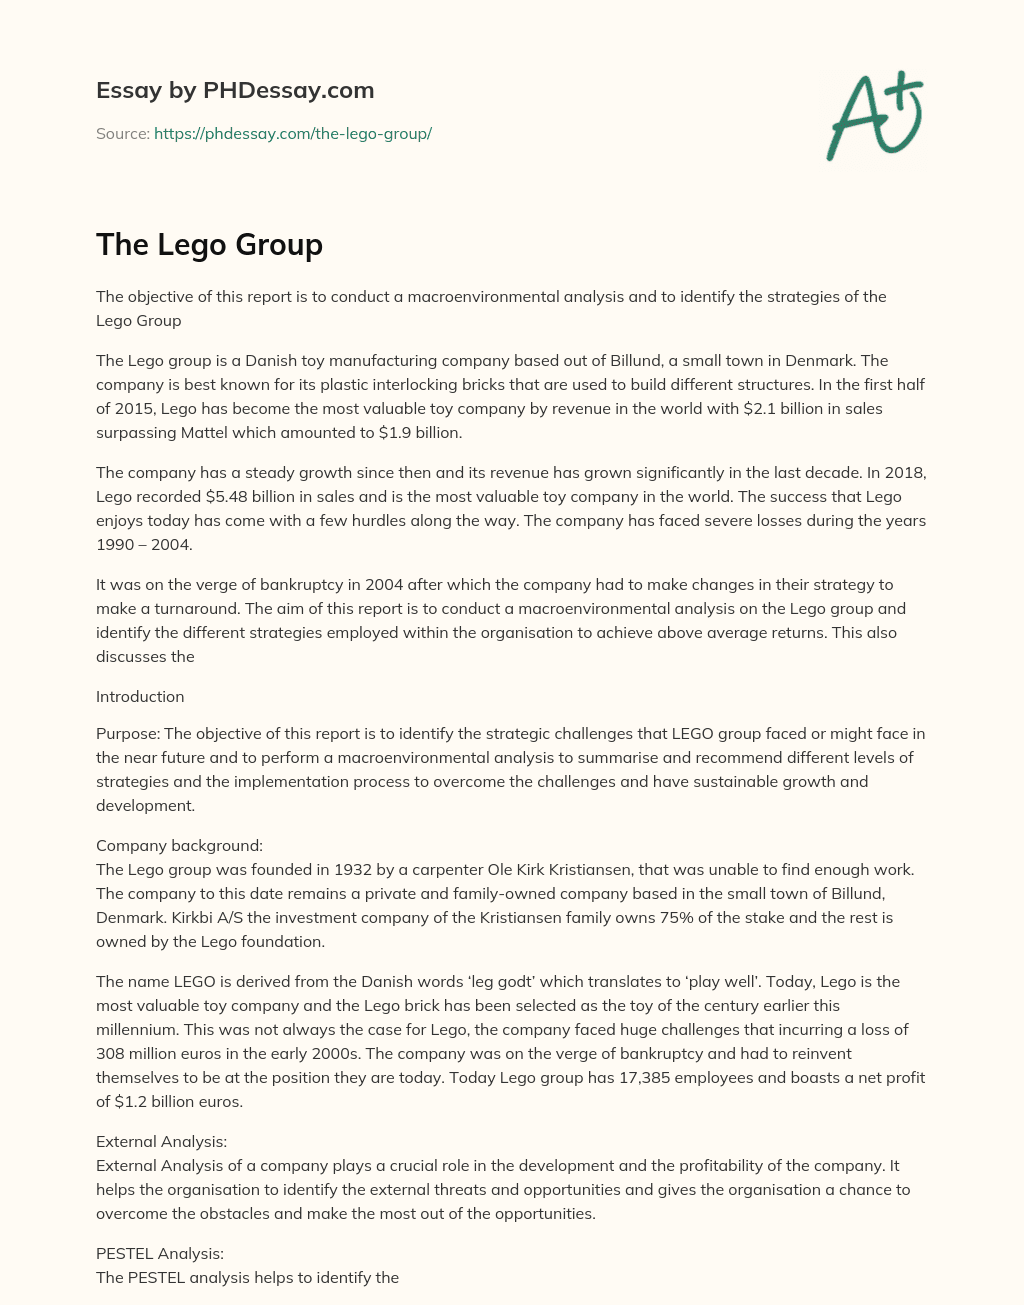 The Lego Group essay